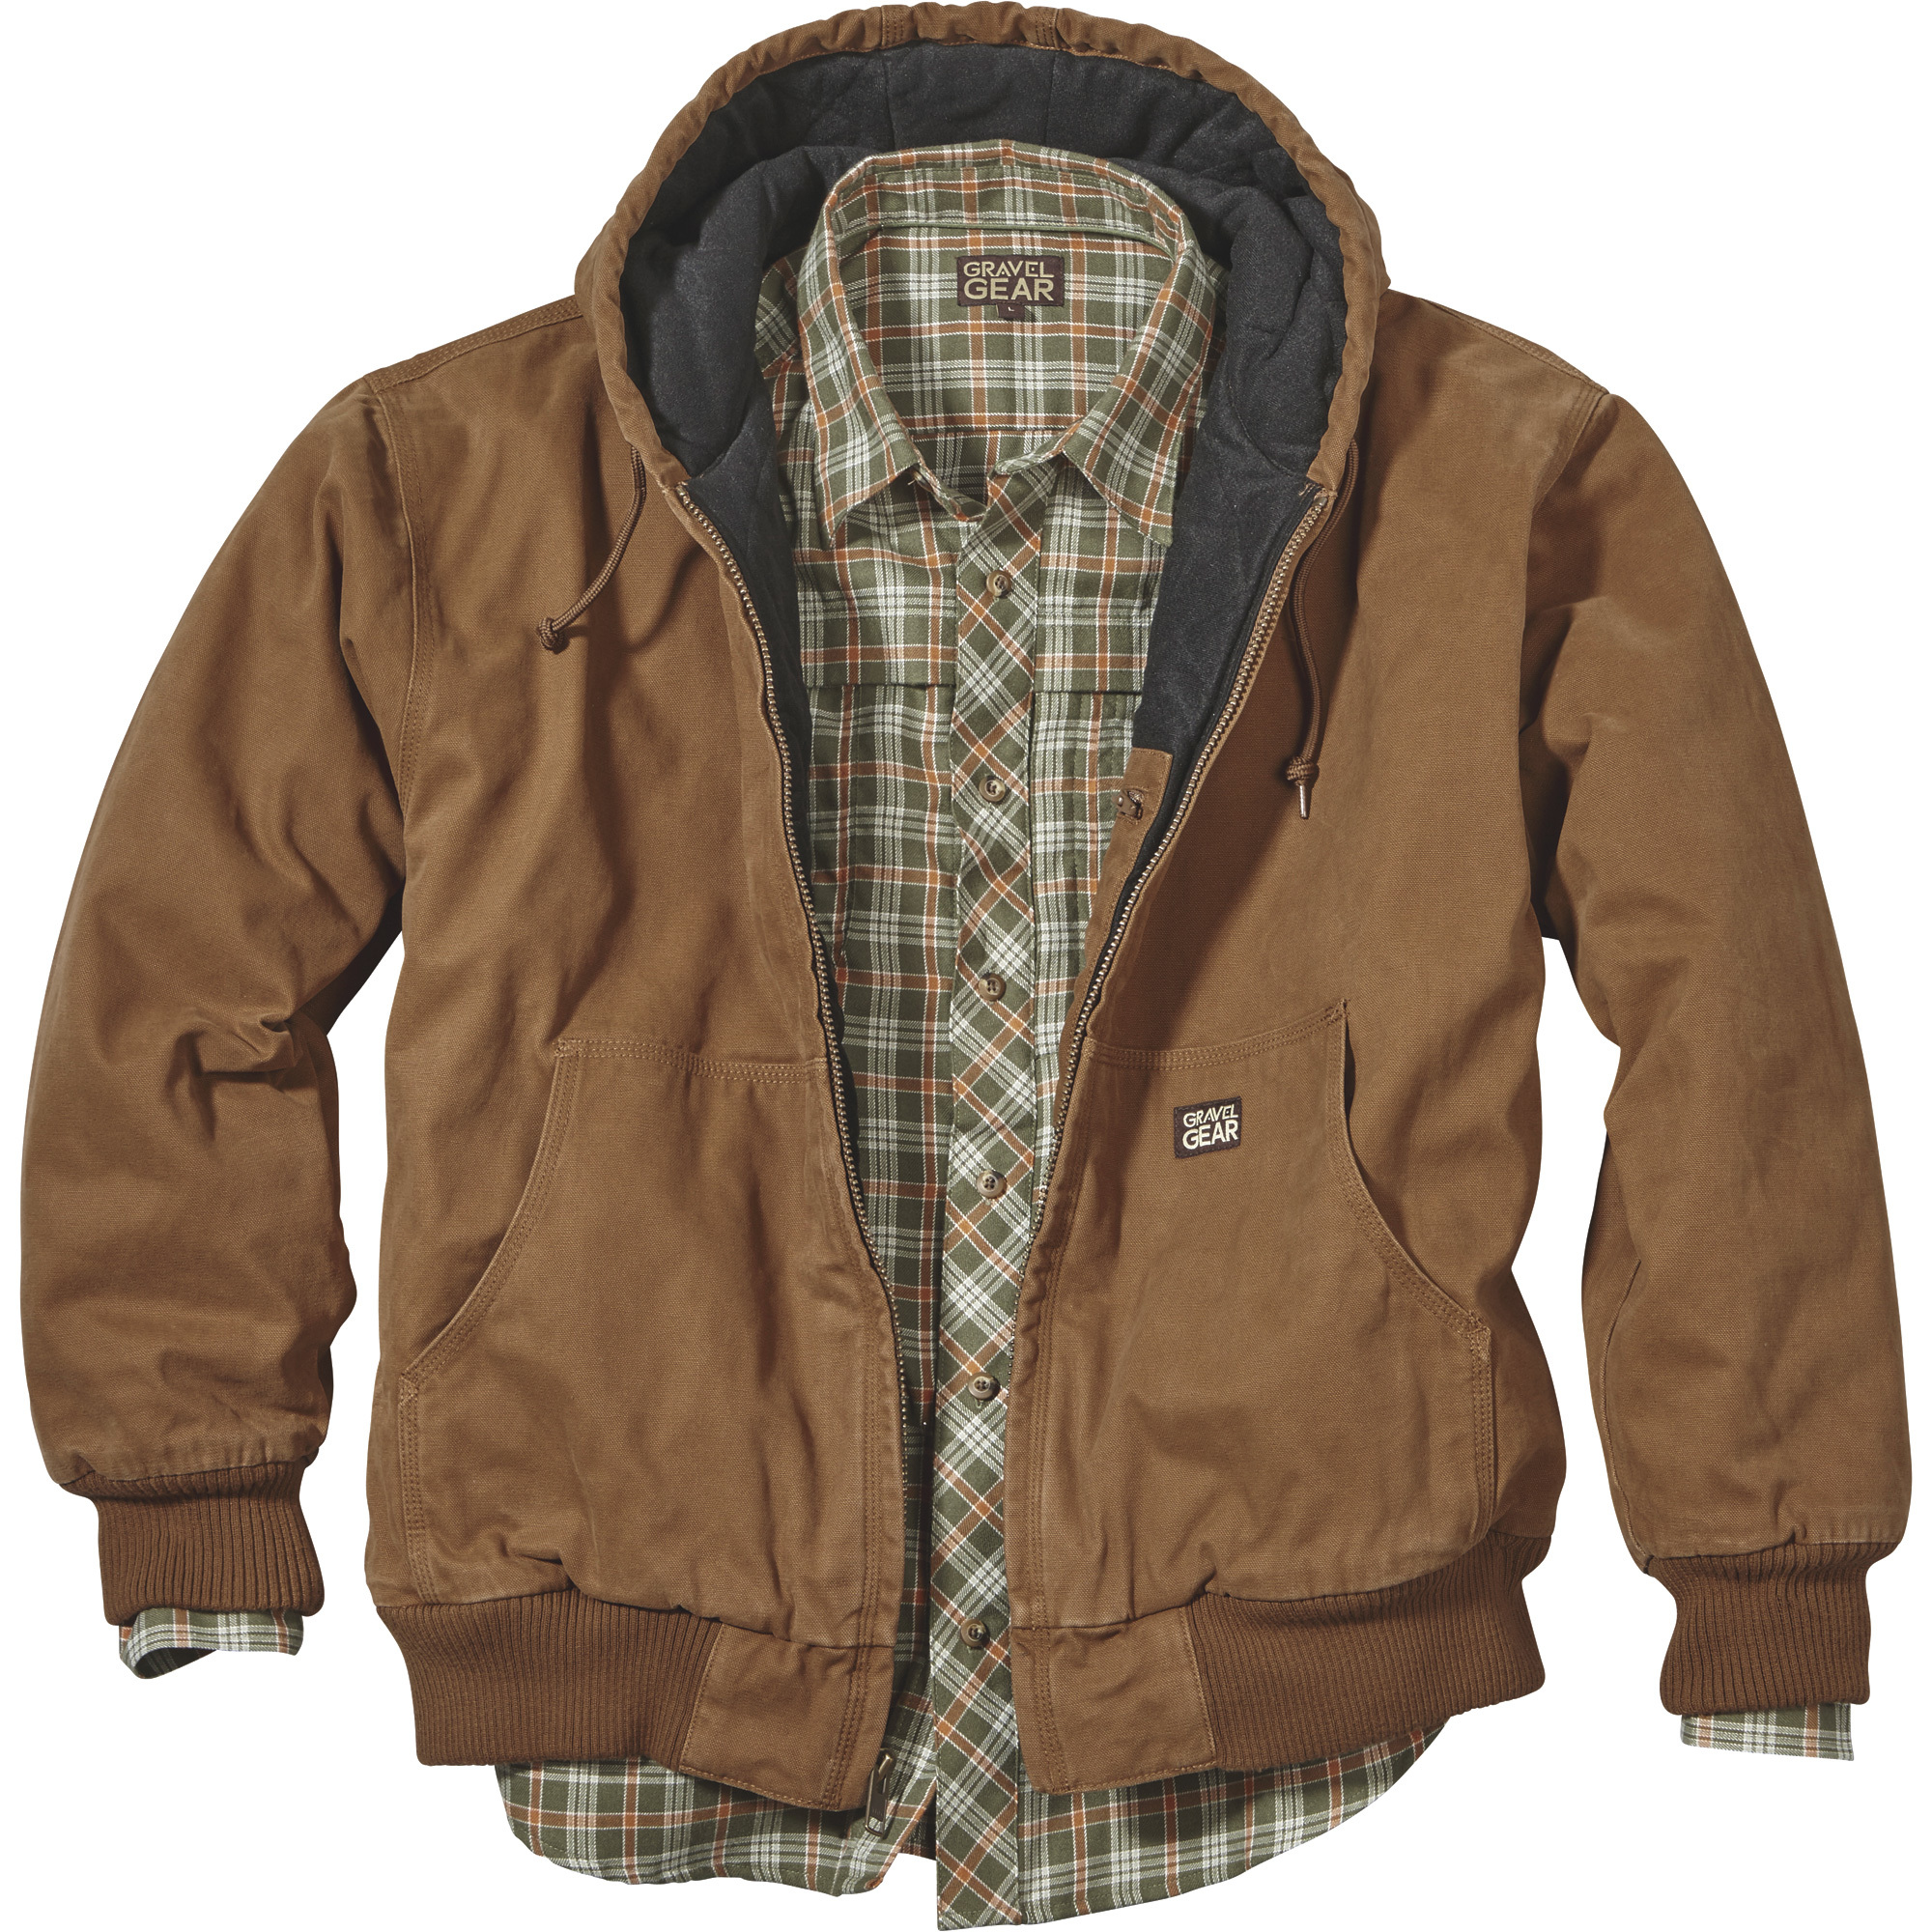 Gravel Gear Men's Hooded Tundra Jacket - Brown, XL